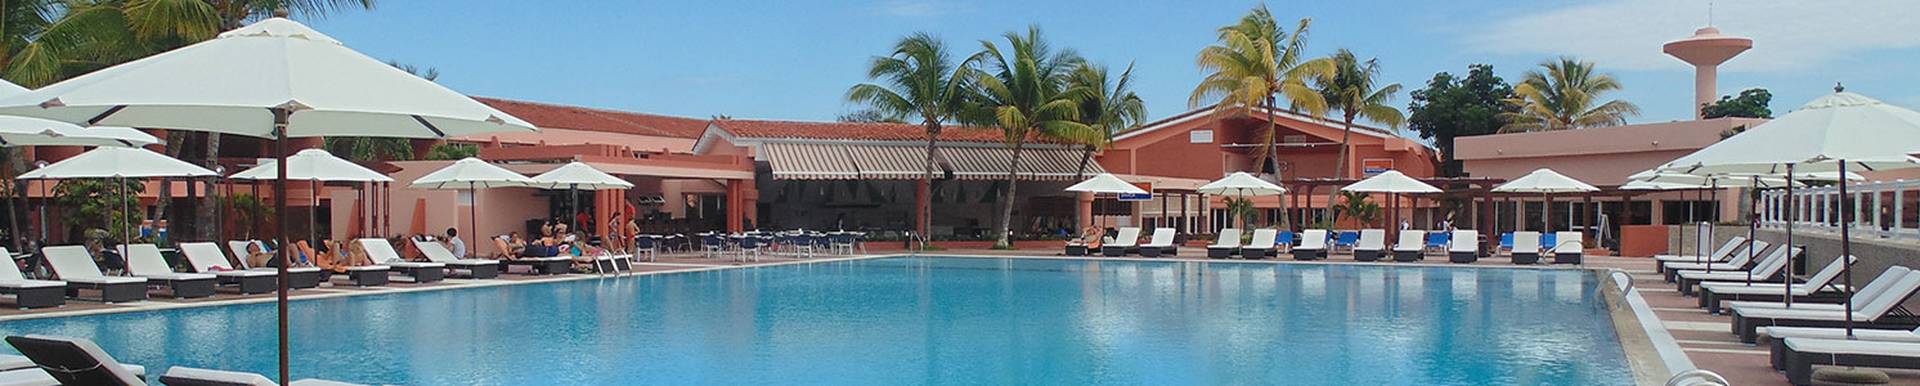 Blau hotels - Kuba - 